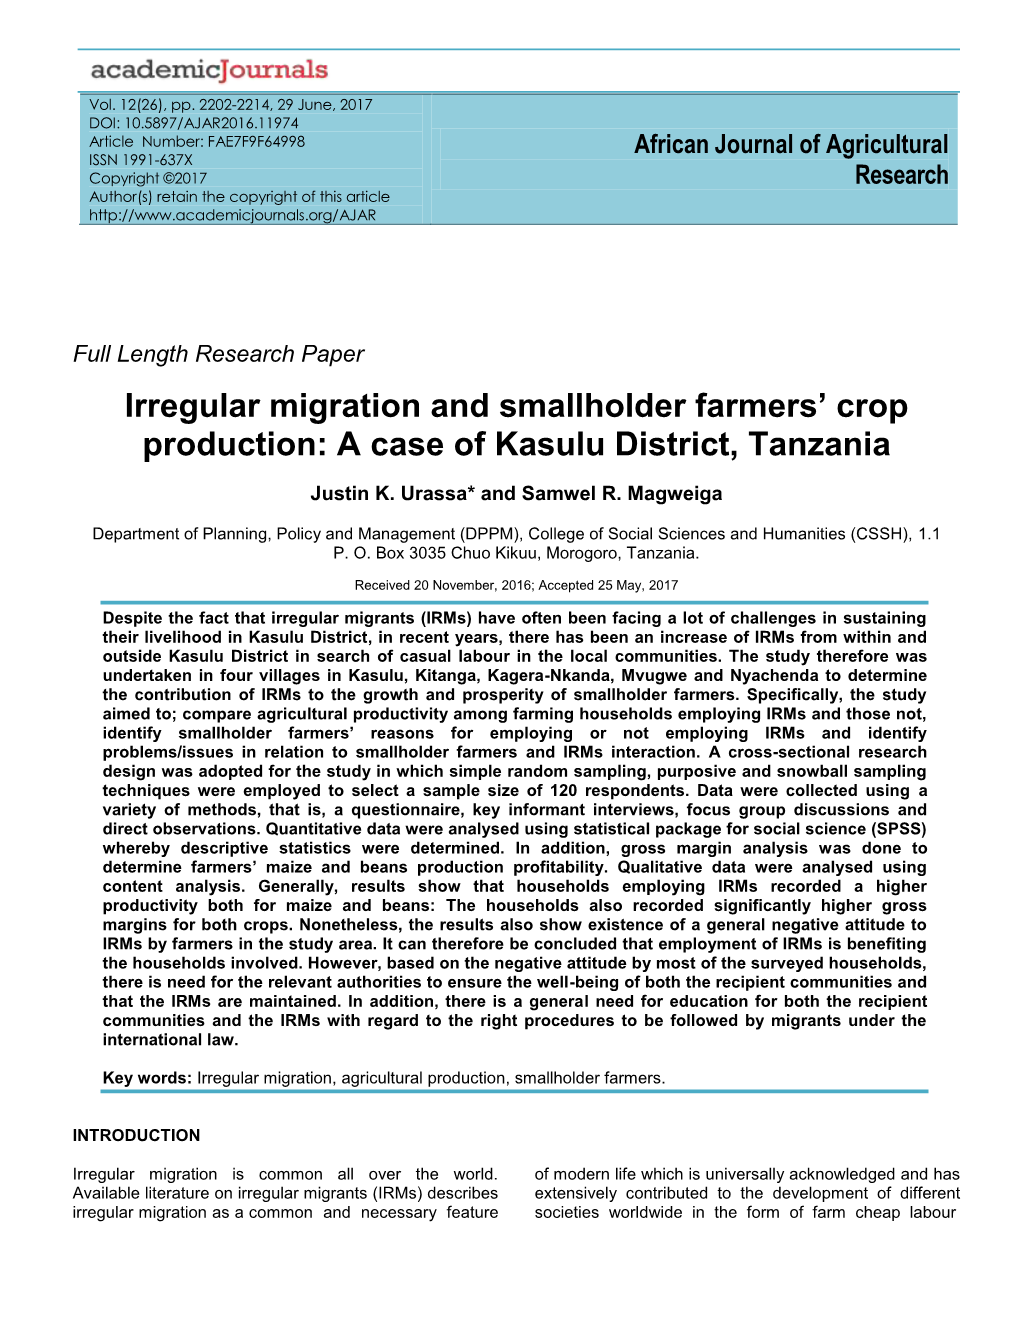 Irregular Migration and Smallholder Farmers' Crop